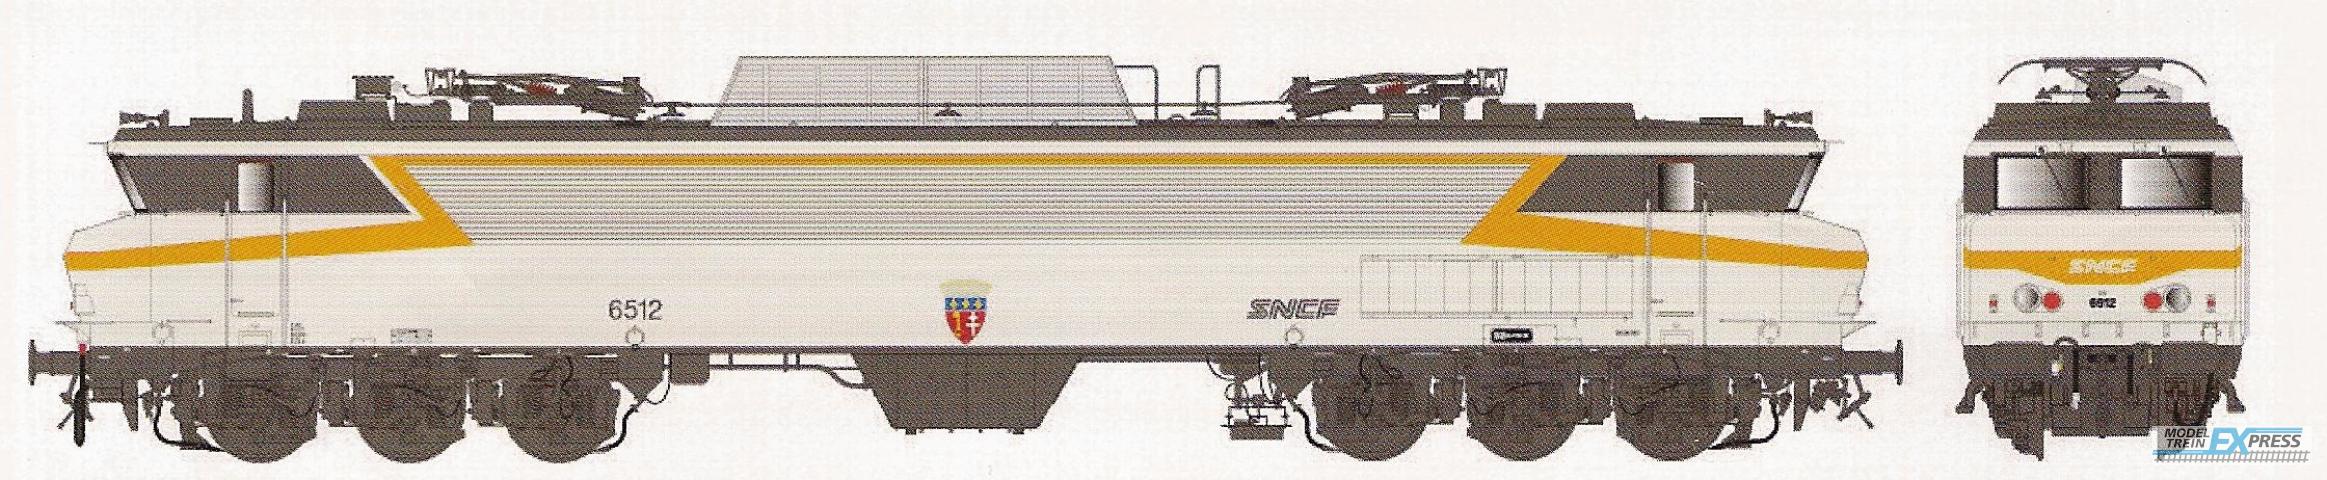 LS Models 10327S CC 6512, grijs/oranje, noedels logo, blazoen Narbonne, 200 km/h  /  Ep. IV  /  SNCF  /  HO  /  DC SOUND  /  1 P.